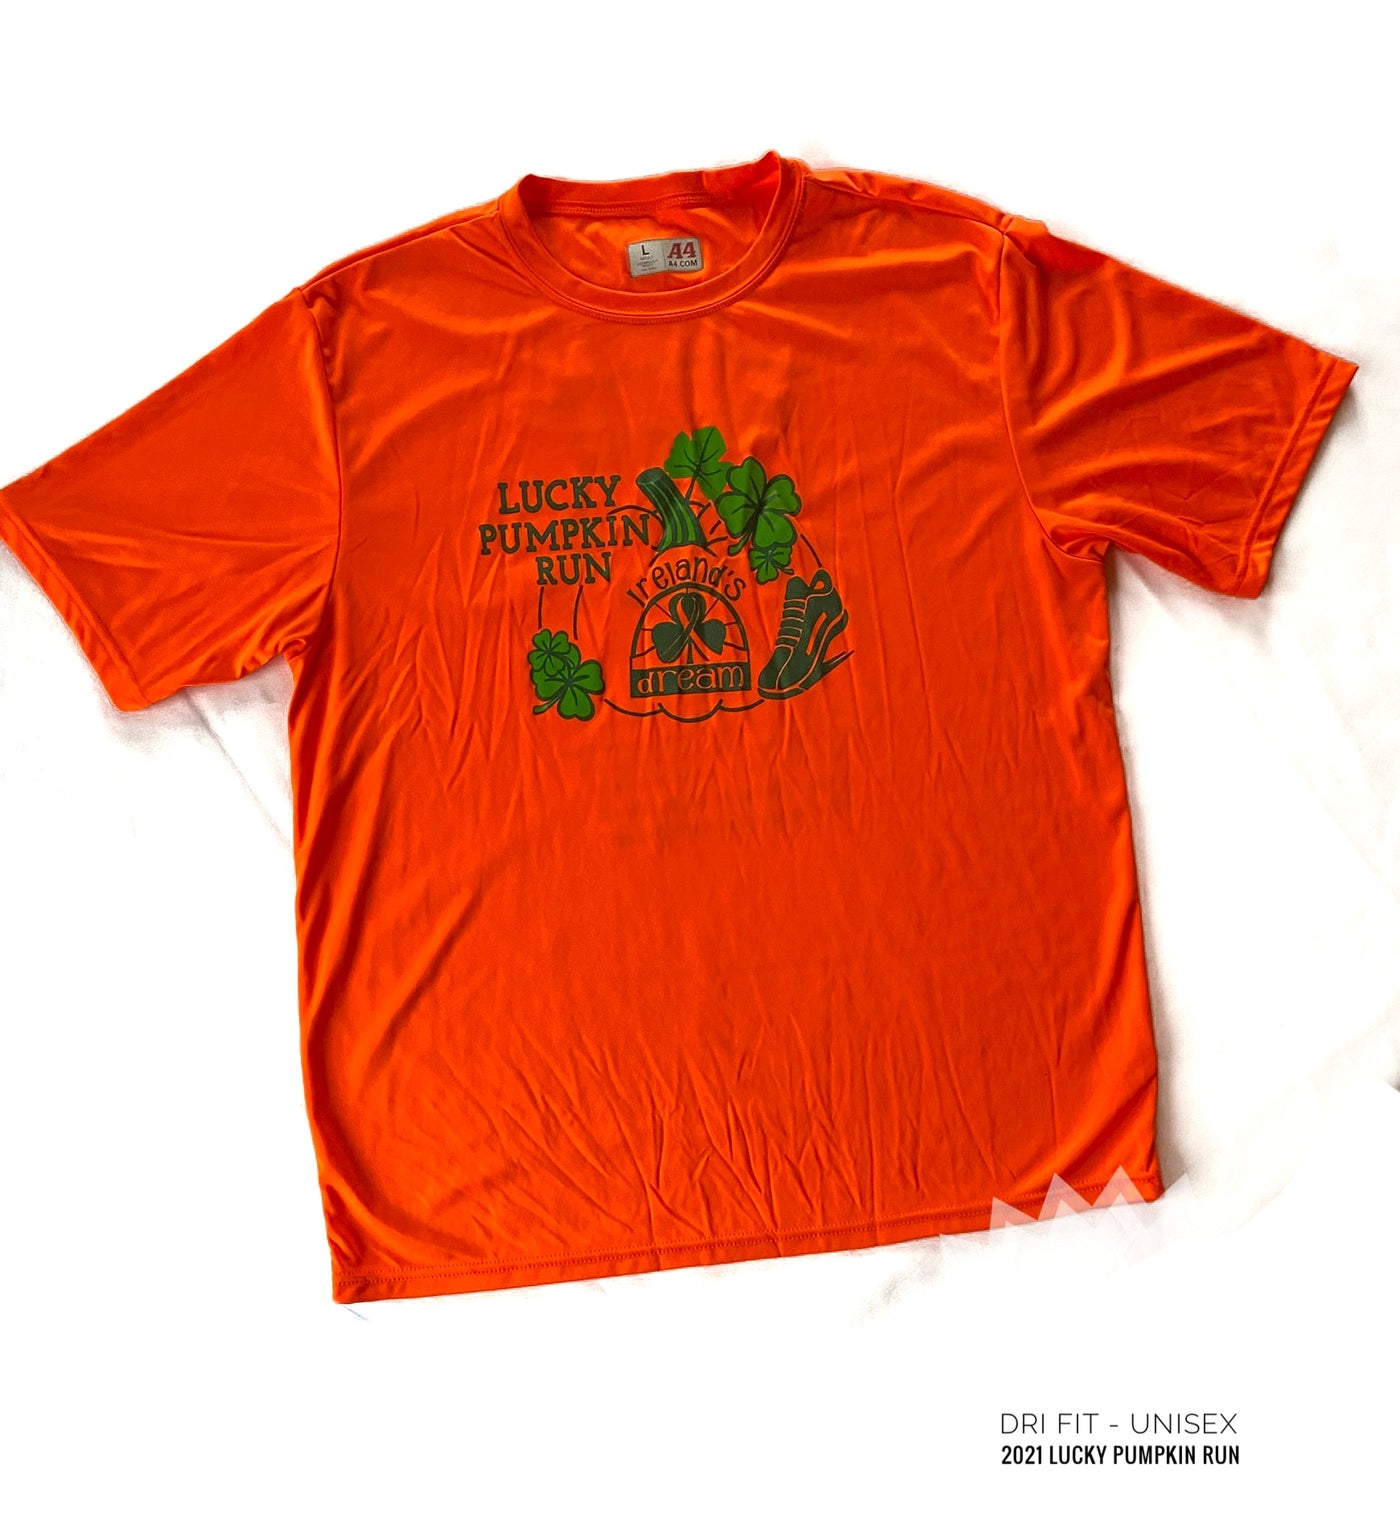 Lucky Pumpkin Run - 5th Annual Race Shirt